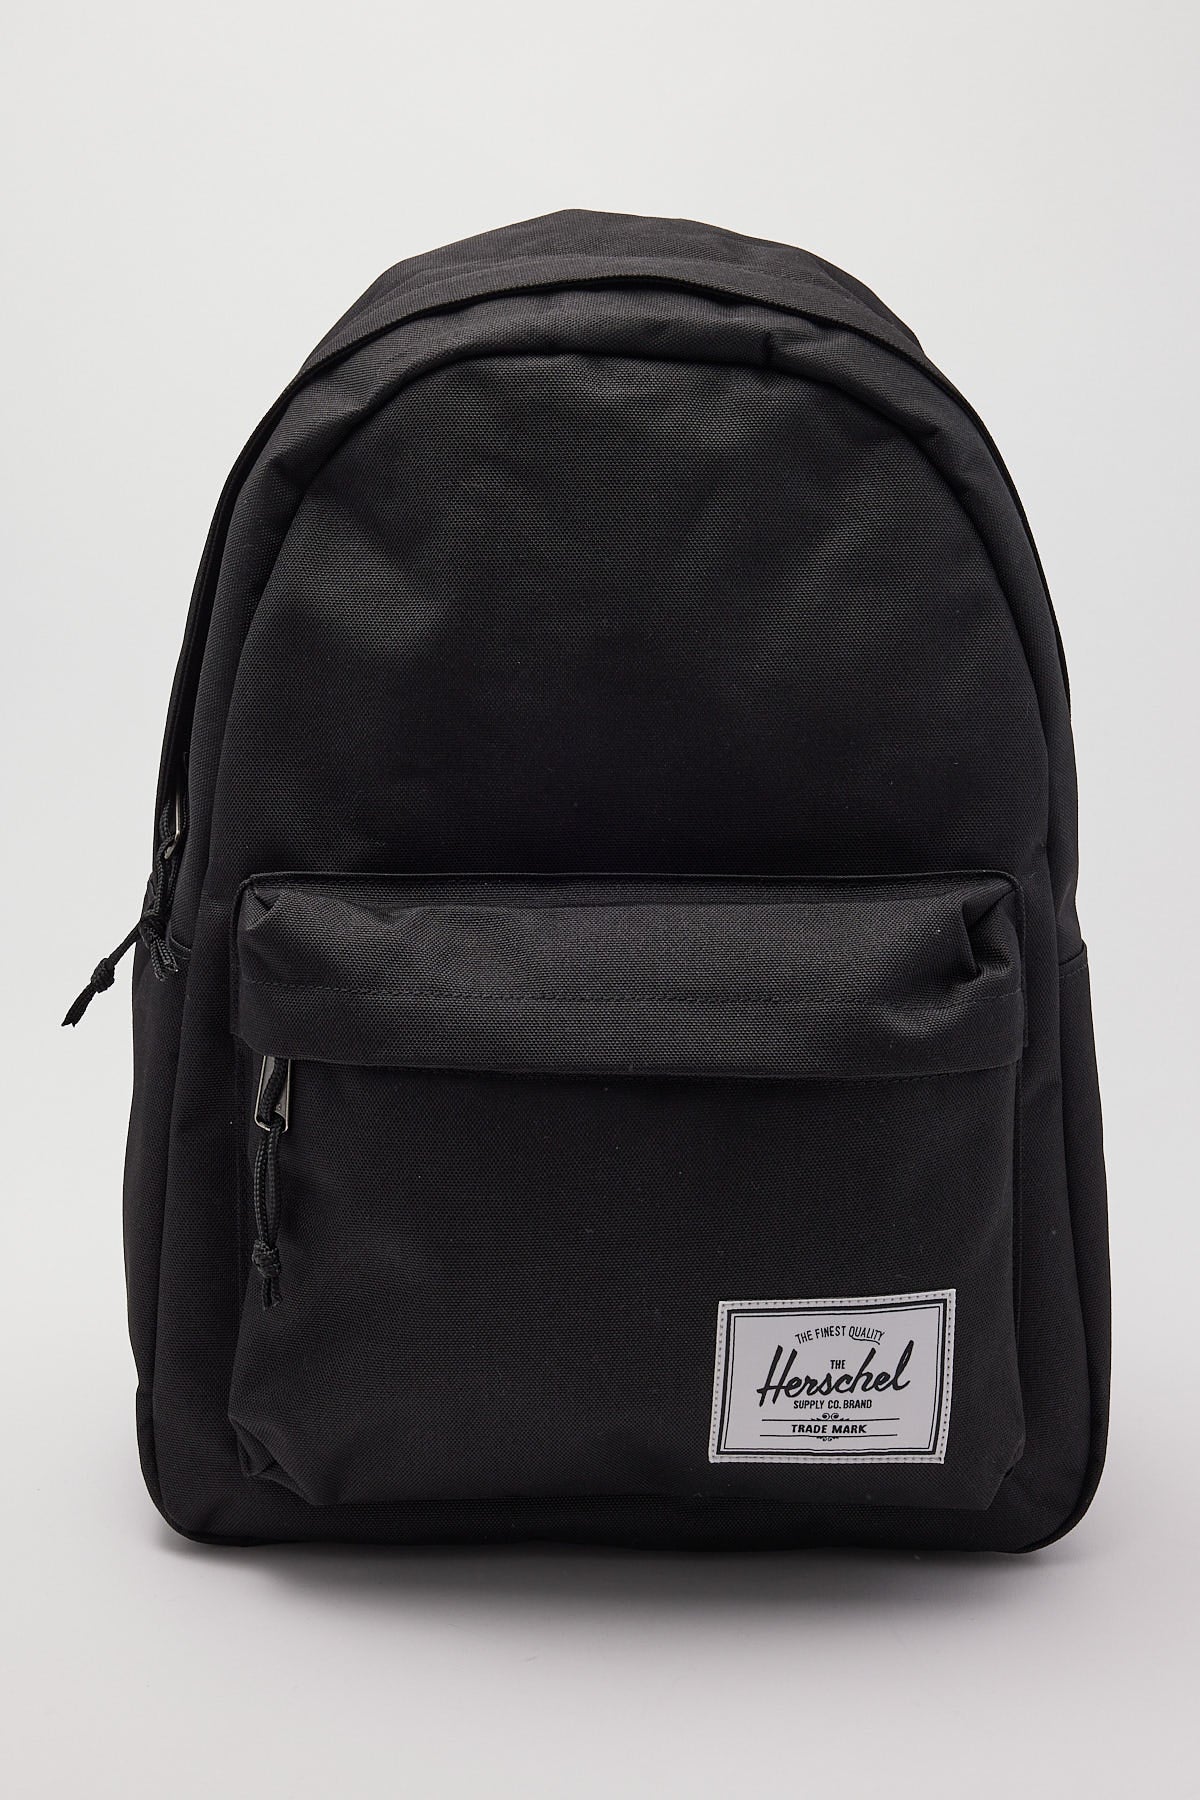 Herschel Supply Co. Classic Backpack Black